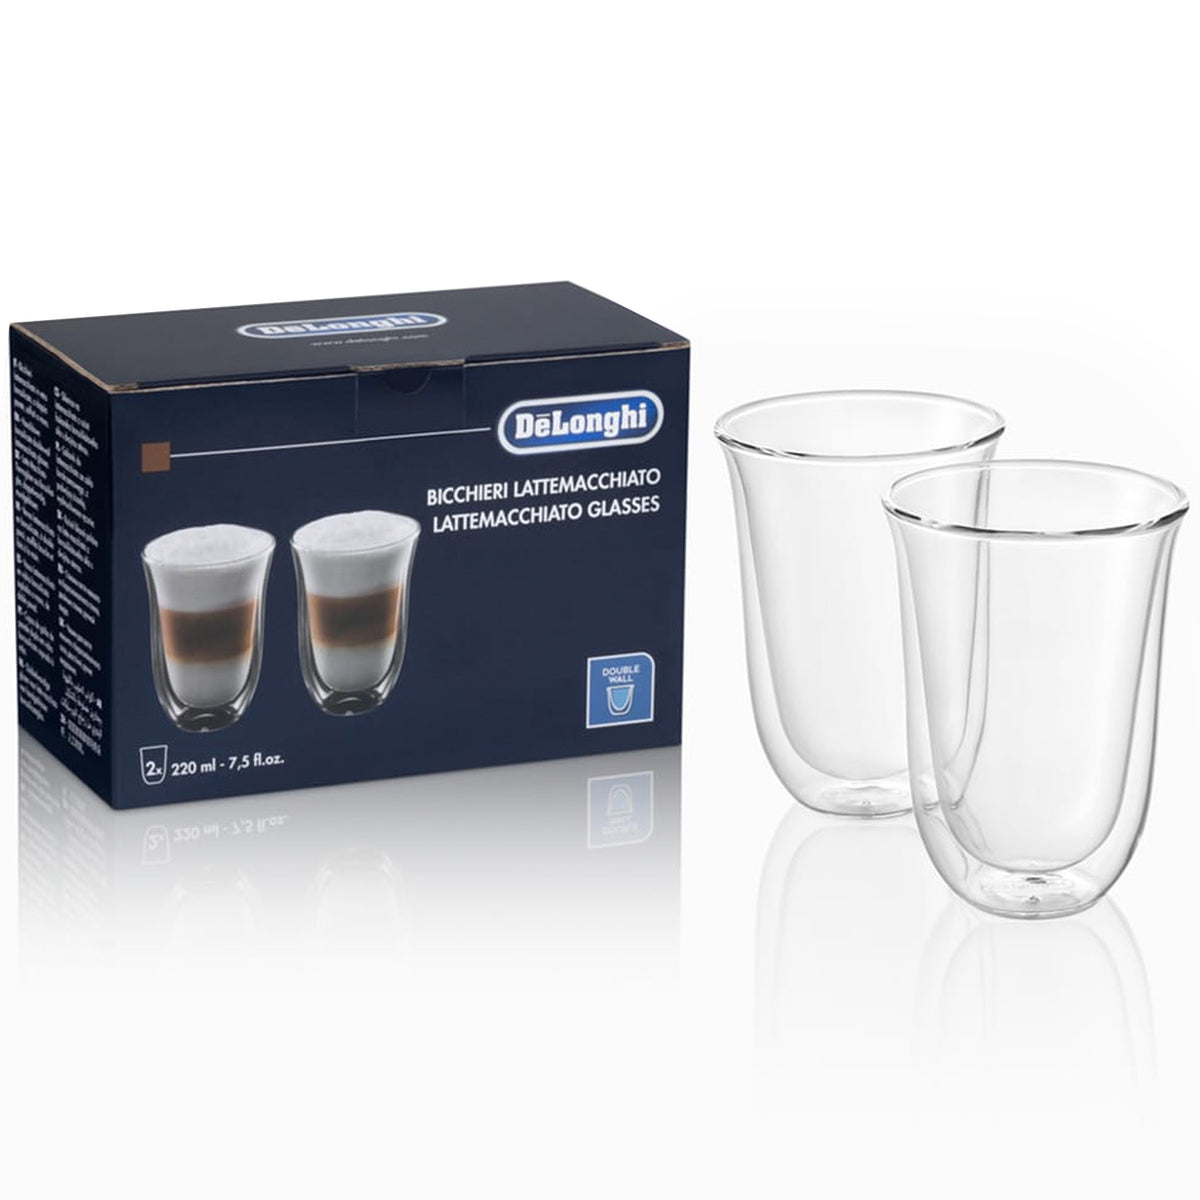 DeLonghi Bicchieri Glass Latte – ECS Set 2 Coffee of Cups, Macchiato